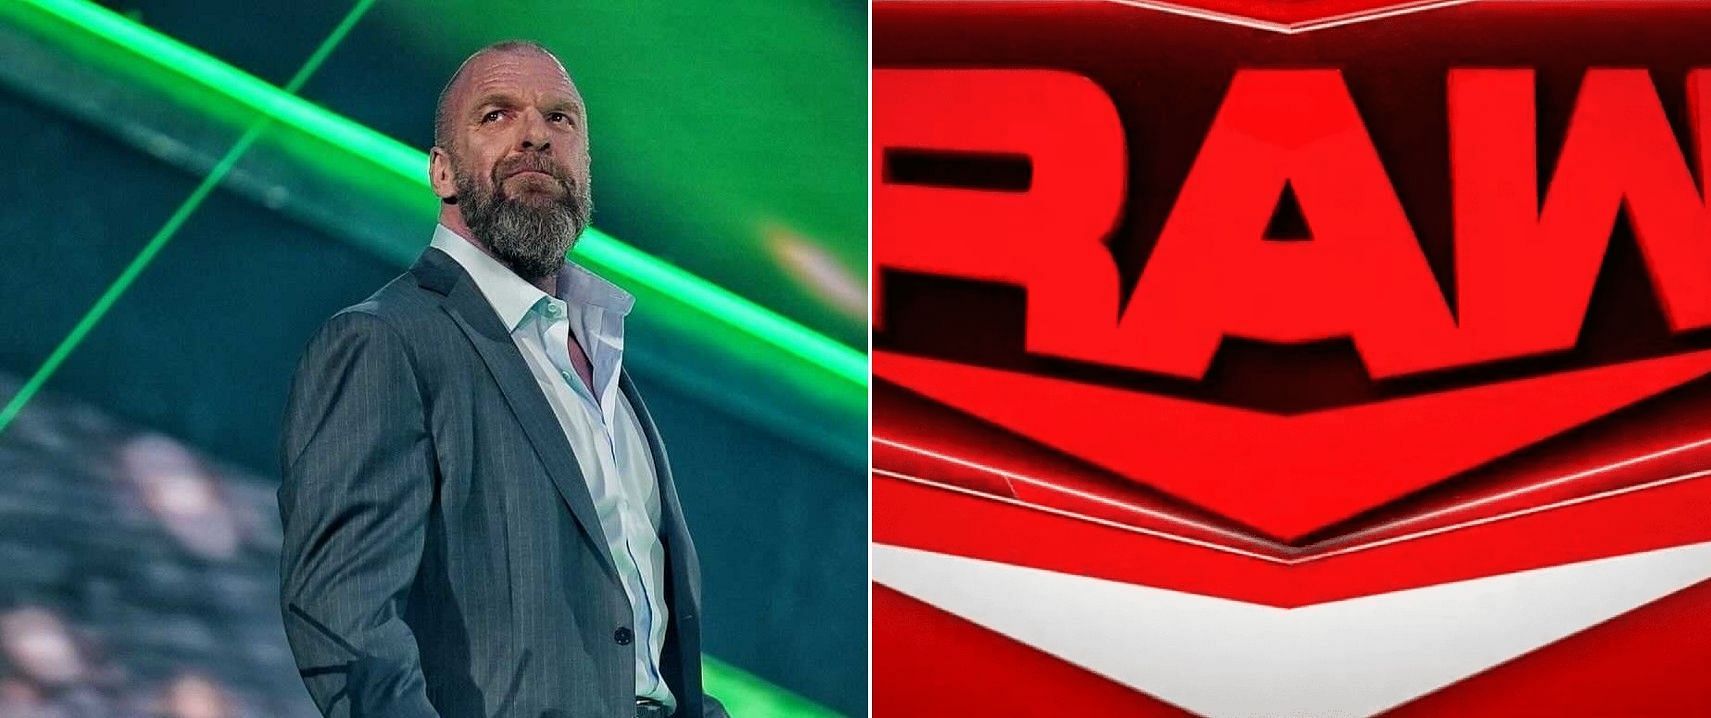 Will Goldberg return to WWE ahead of WrestleMania?